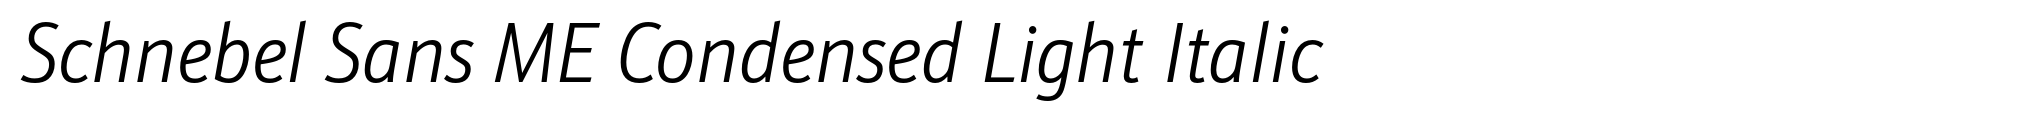 Schnebel Sans ME Condensed Light Italic image